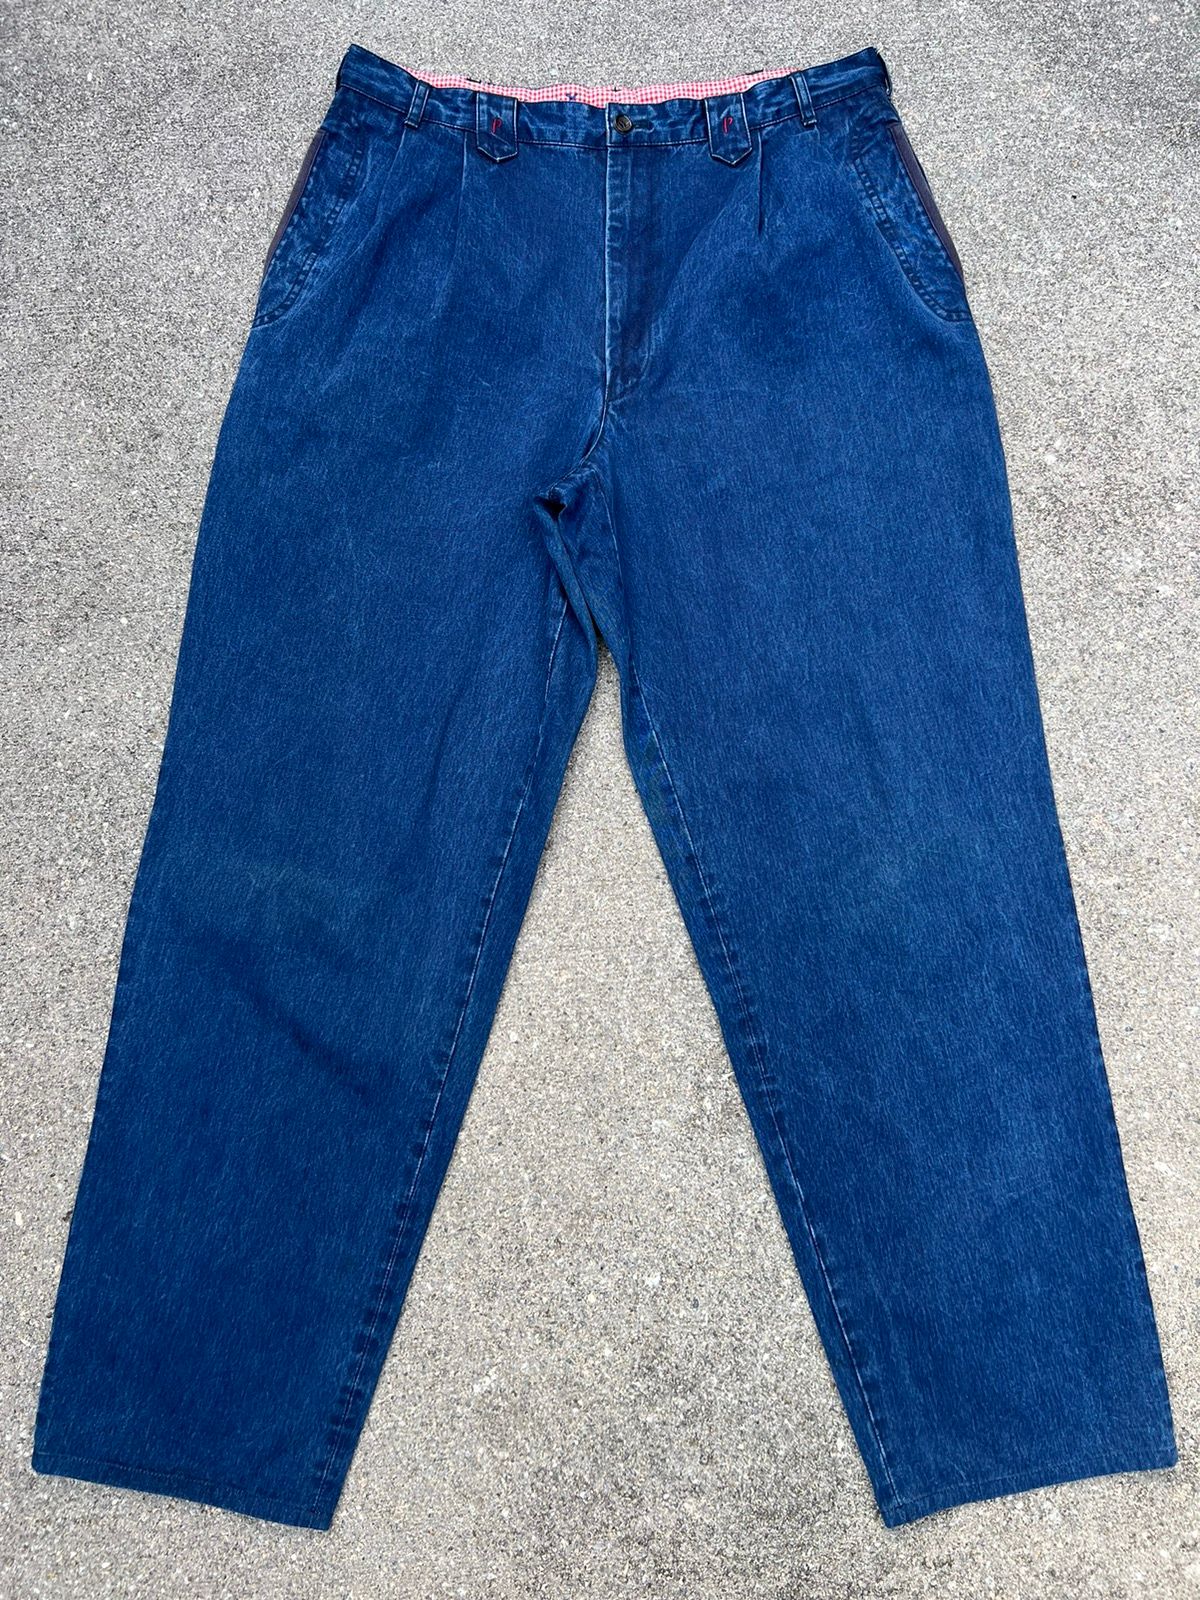 Orslow Vintage Papas Japan Sun Faded Indigo Blue Baggy Chinos Pant Size US 34 / EU 50 - 1 Preview